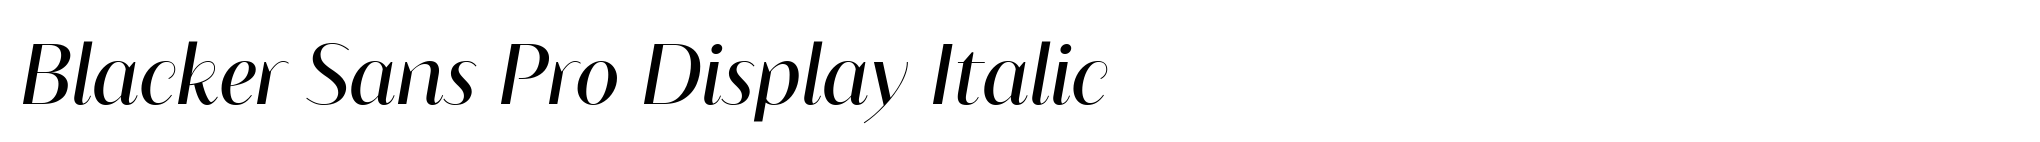 Blacker Sans Pro Display Italic image